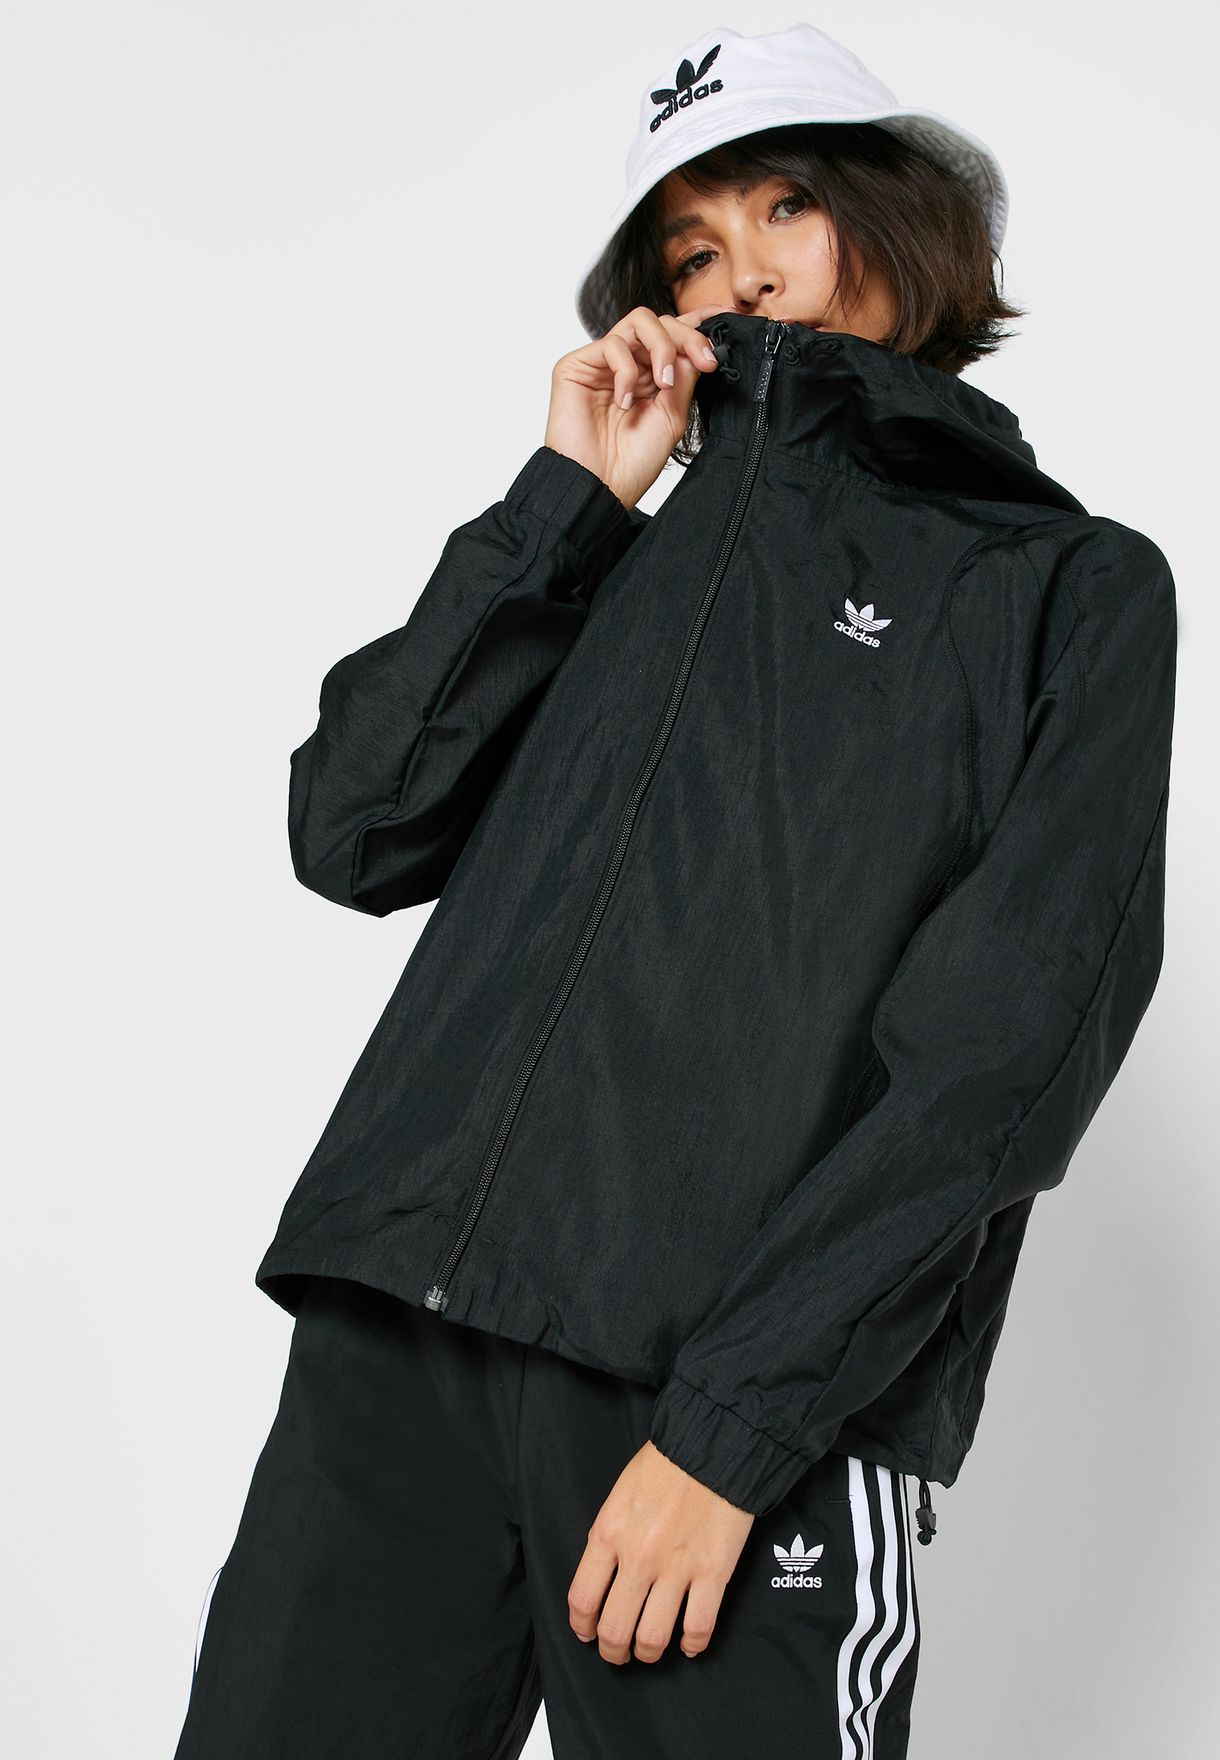 adidas windbreaker jacket